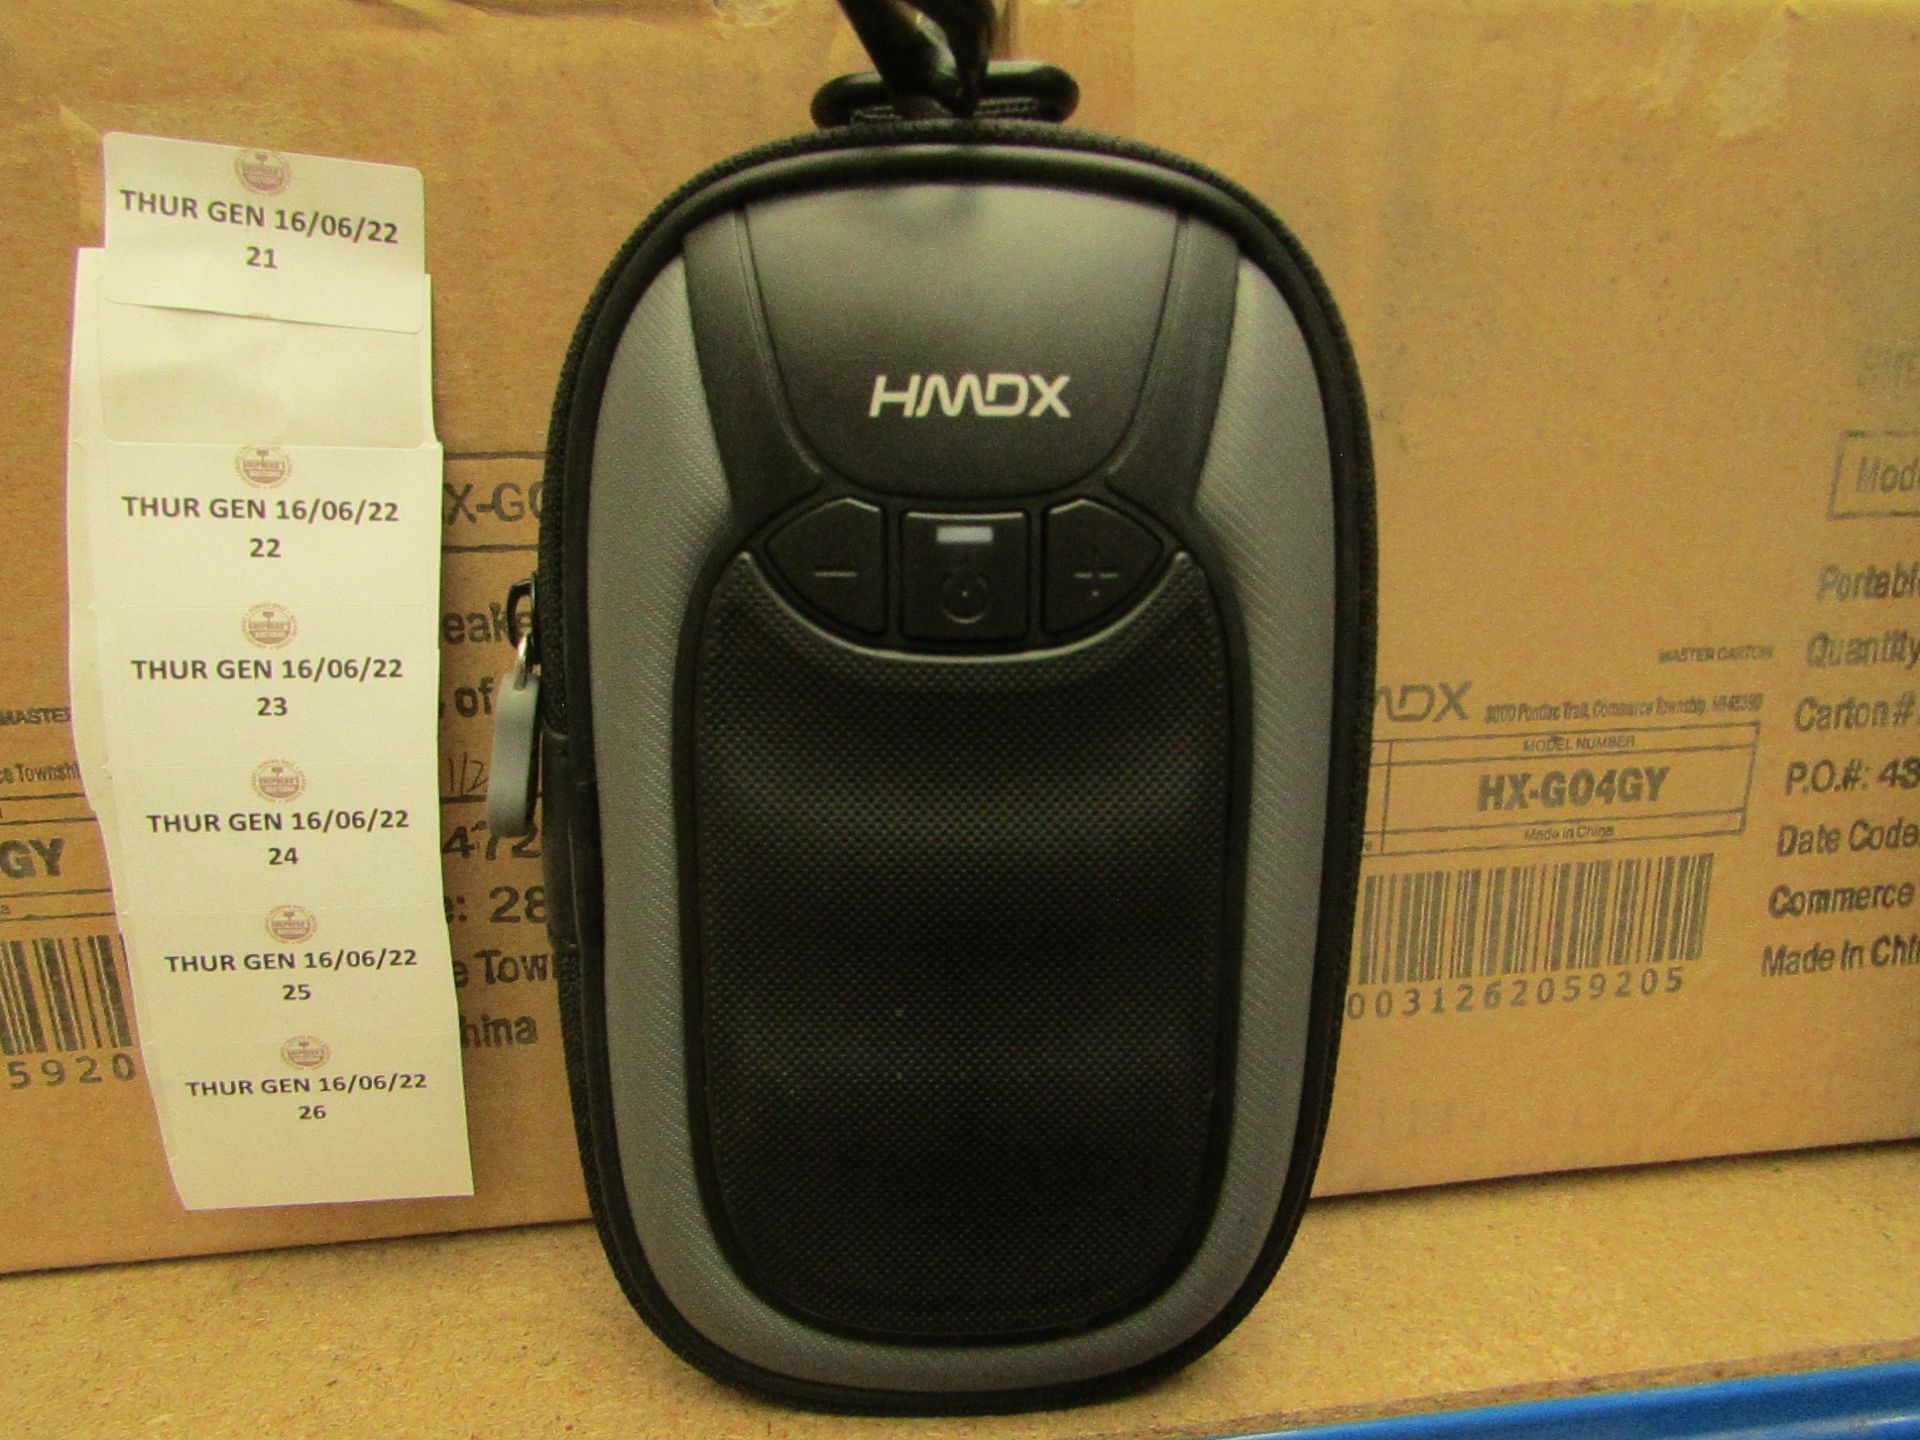 1 X Box of 4 HMDX Portable Speakers Black Boxed